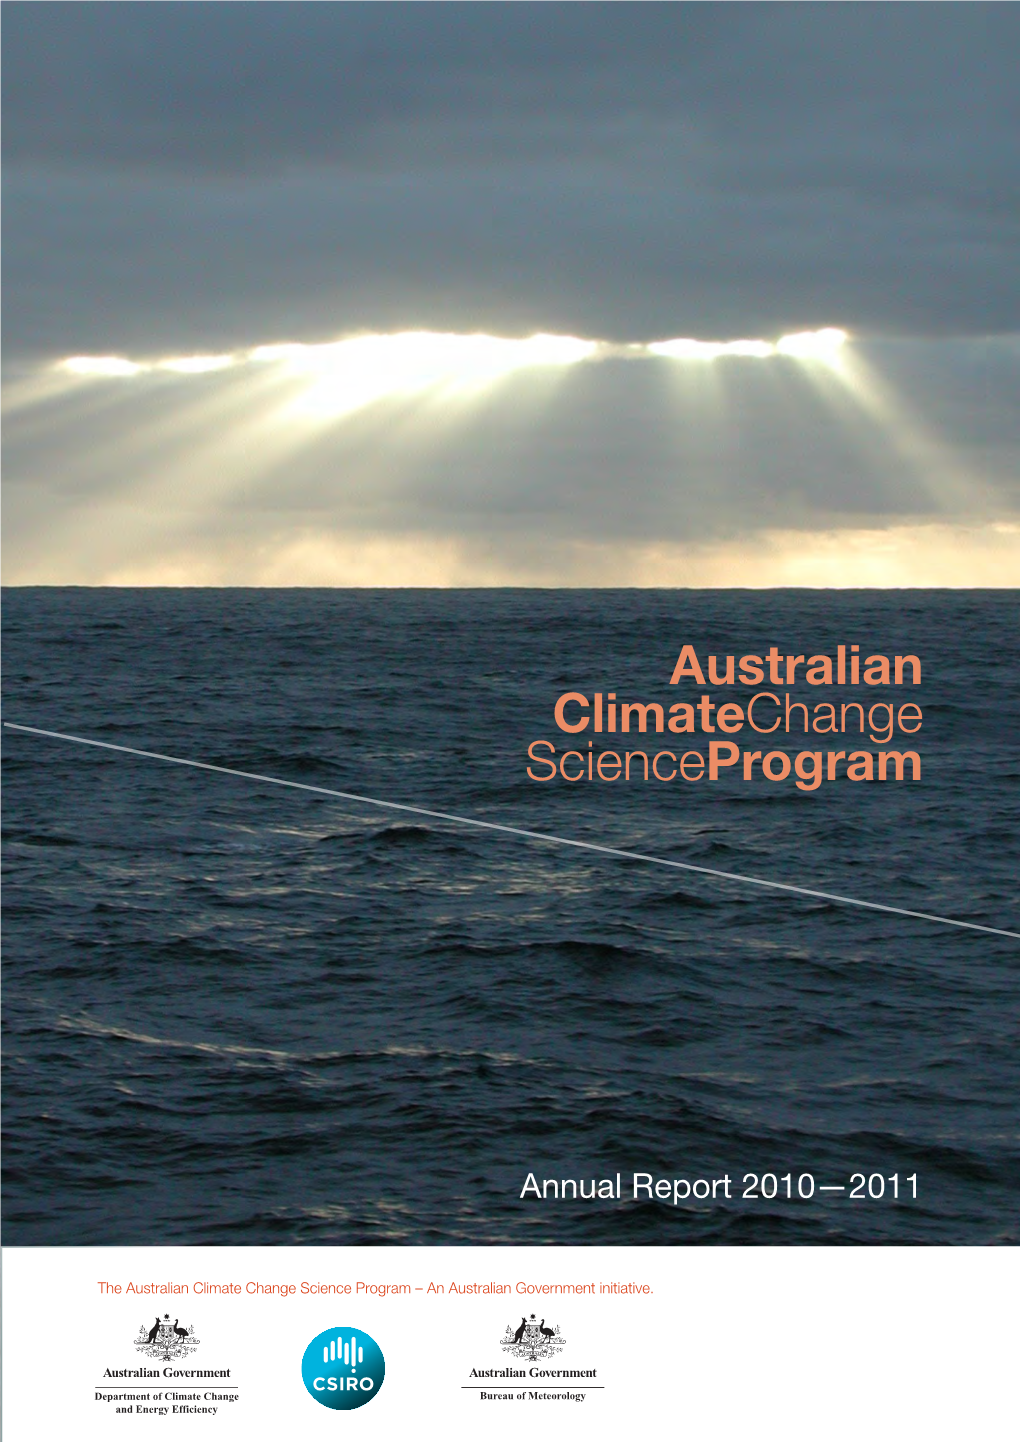 Australian Climate Change Science Program Annual Report 2010-2011